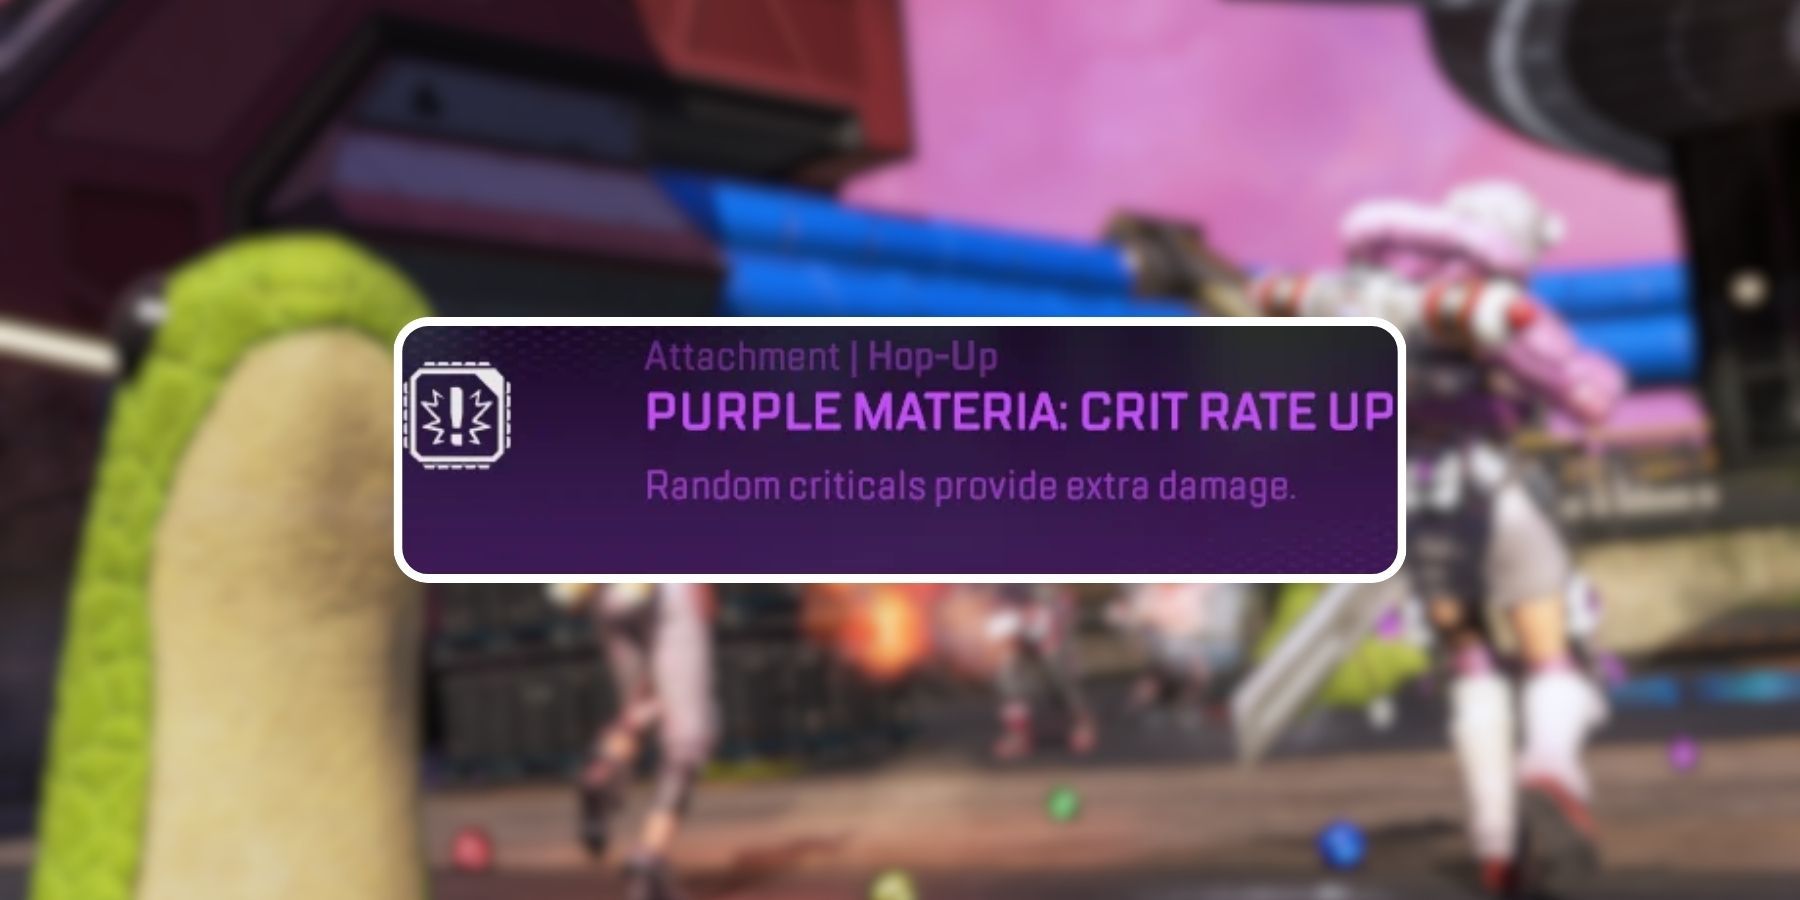 Purple Materia Hop-Up